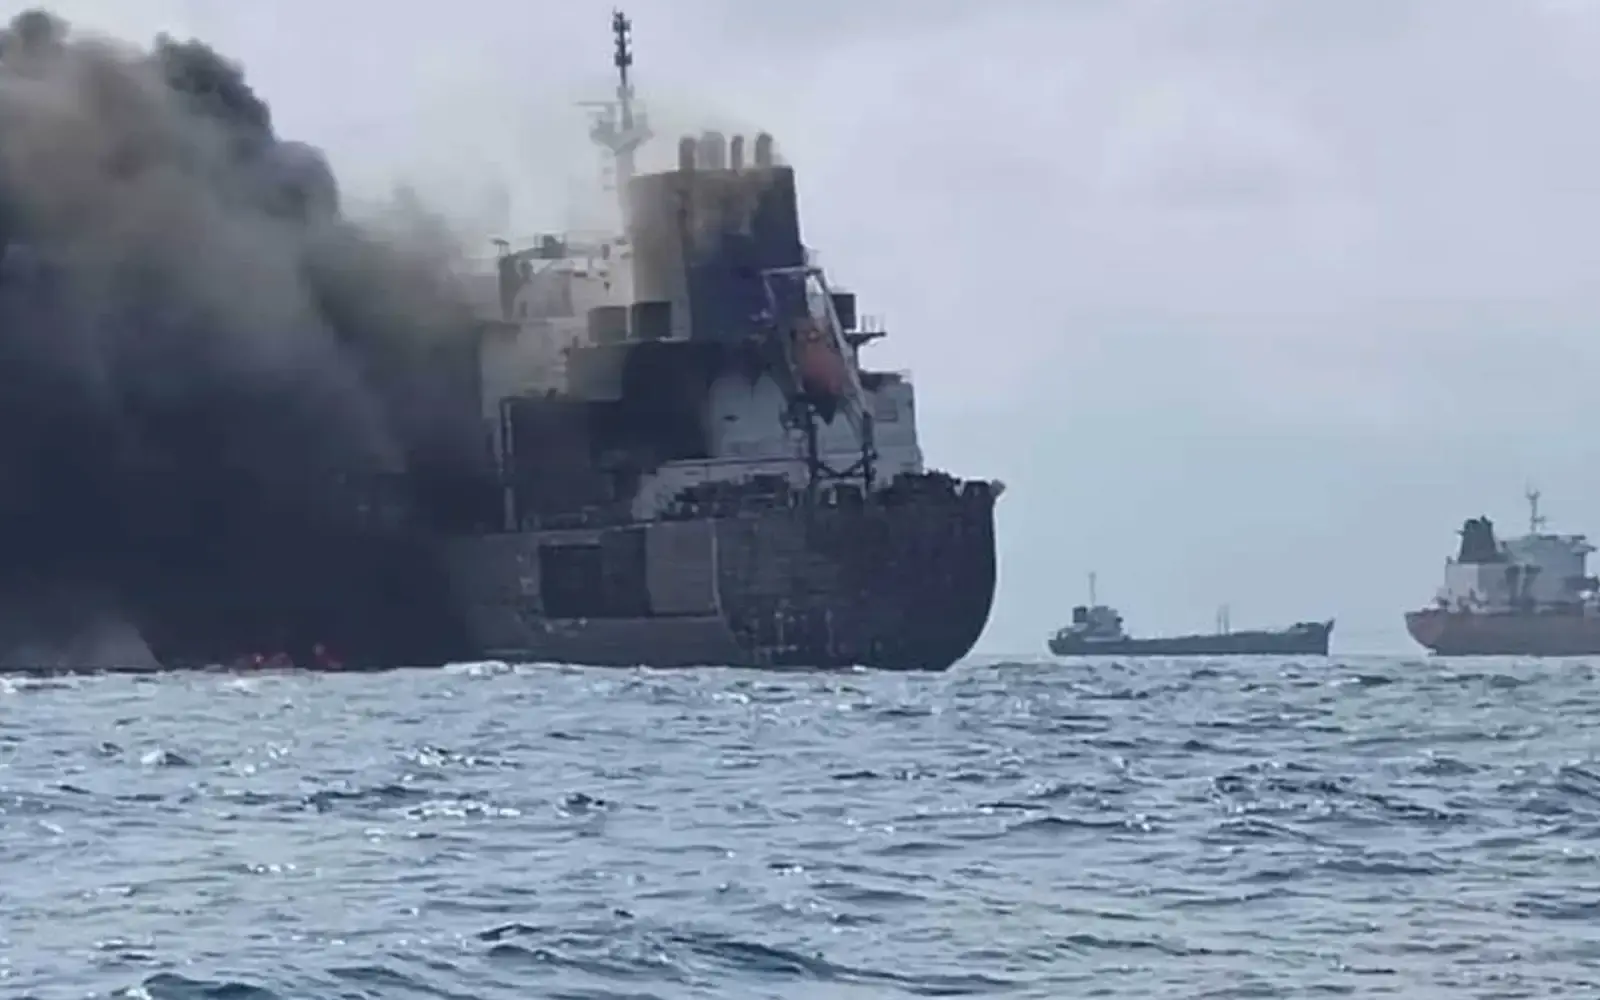 Malaysia coast guard reports tanker involved in accident left scene